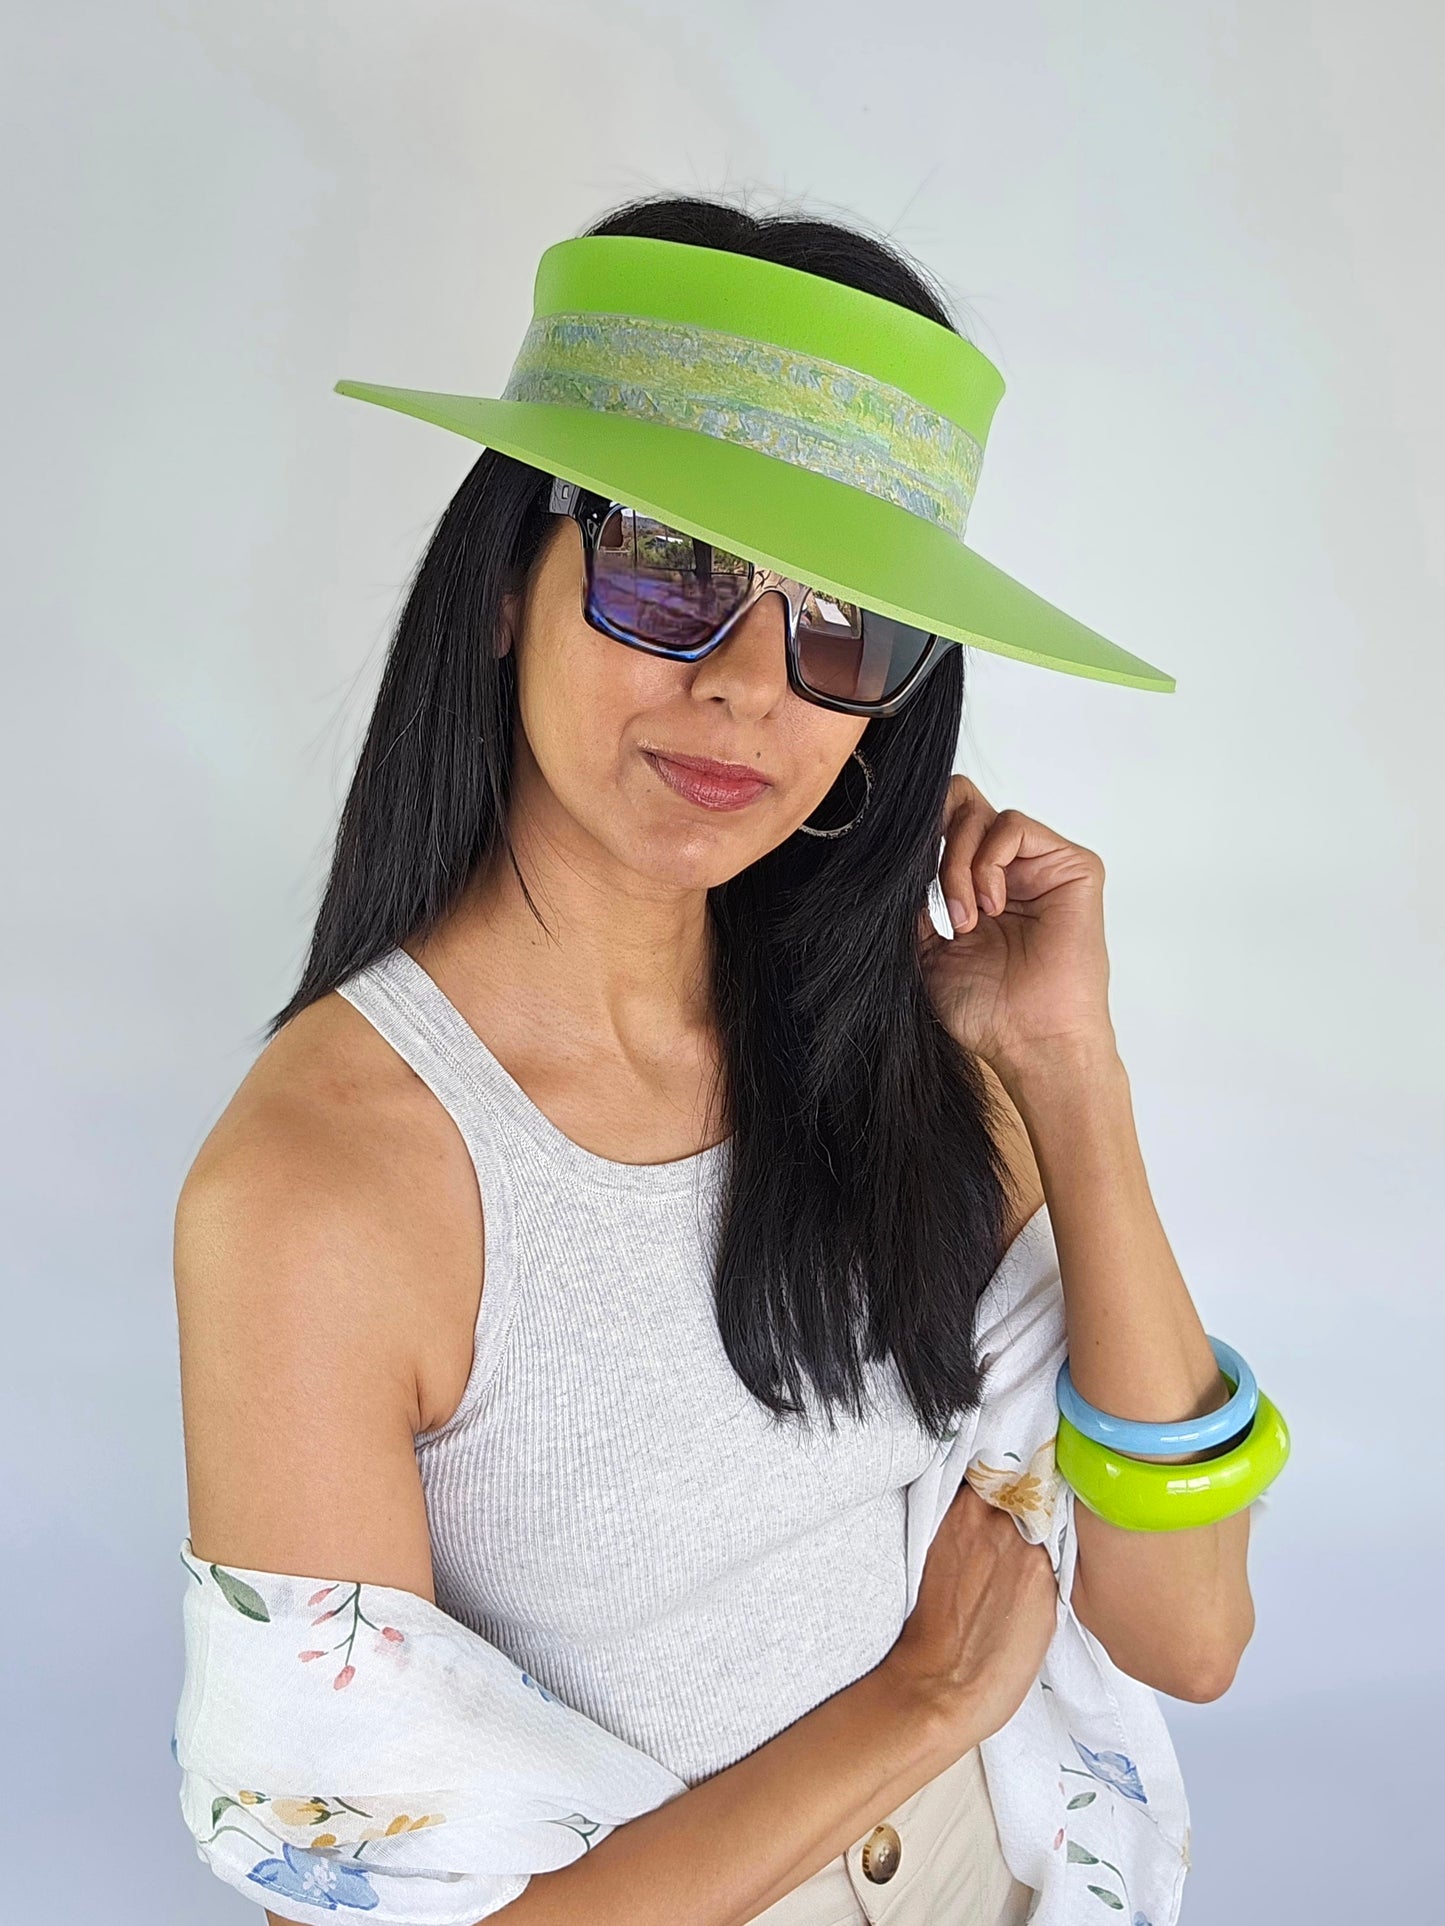 Neon Green Audrey Sun Visor Hat with Lovely Monet Style Floral Band: Tea, Walks, Brunch, Asian, Golf, Summer, Church, No Headache, Pool, Beach